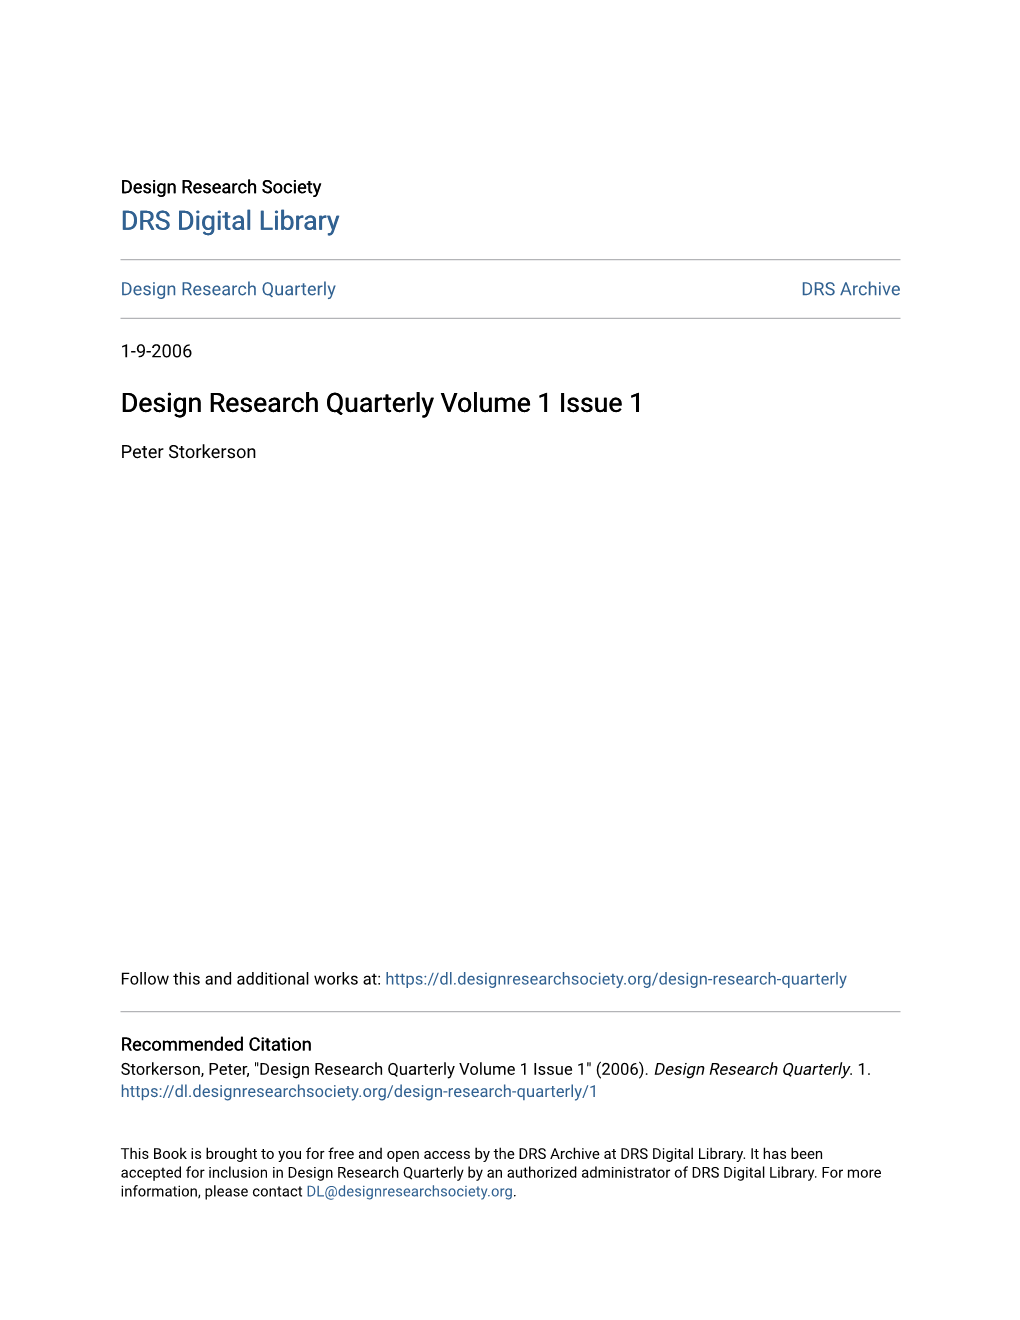 Design Research Quarterly Volume 1 Issue 1